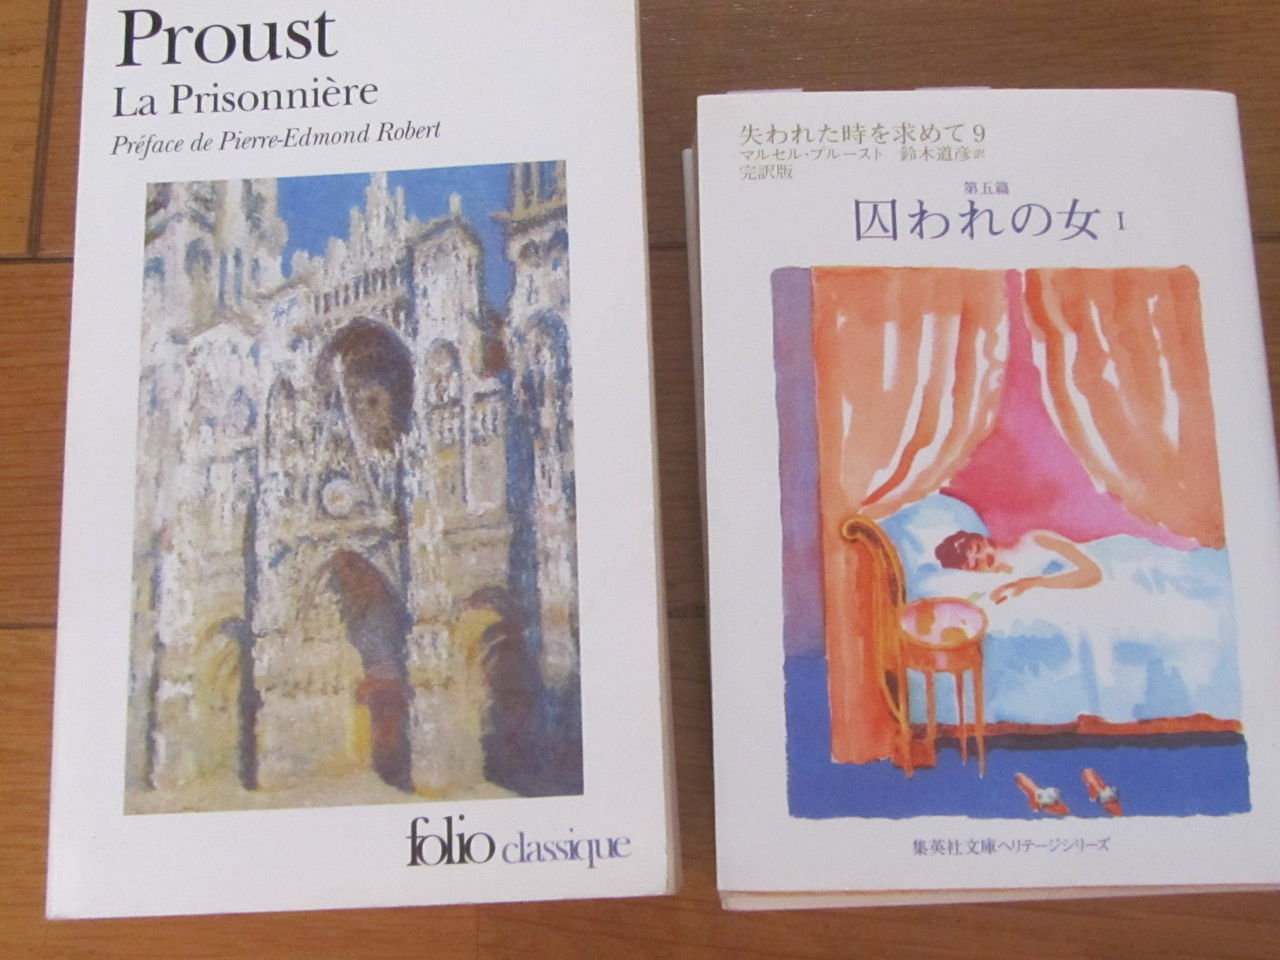 Proust 読了 フランスとフランス語あれこれ 英語もちょっぴり